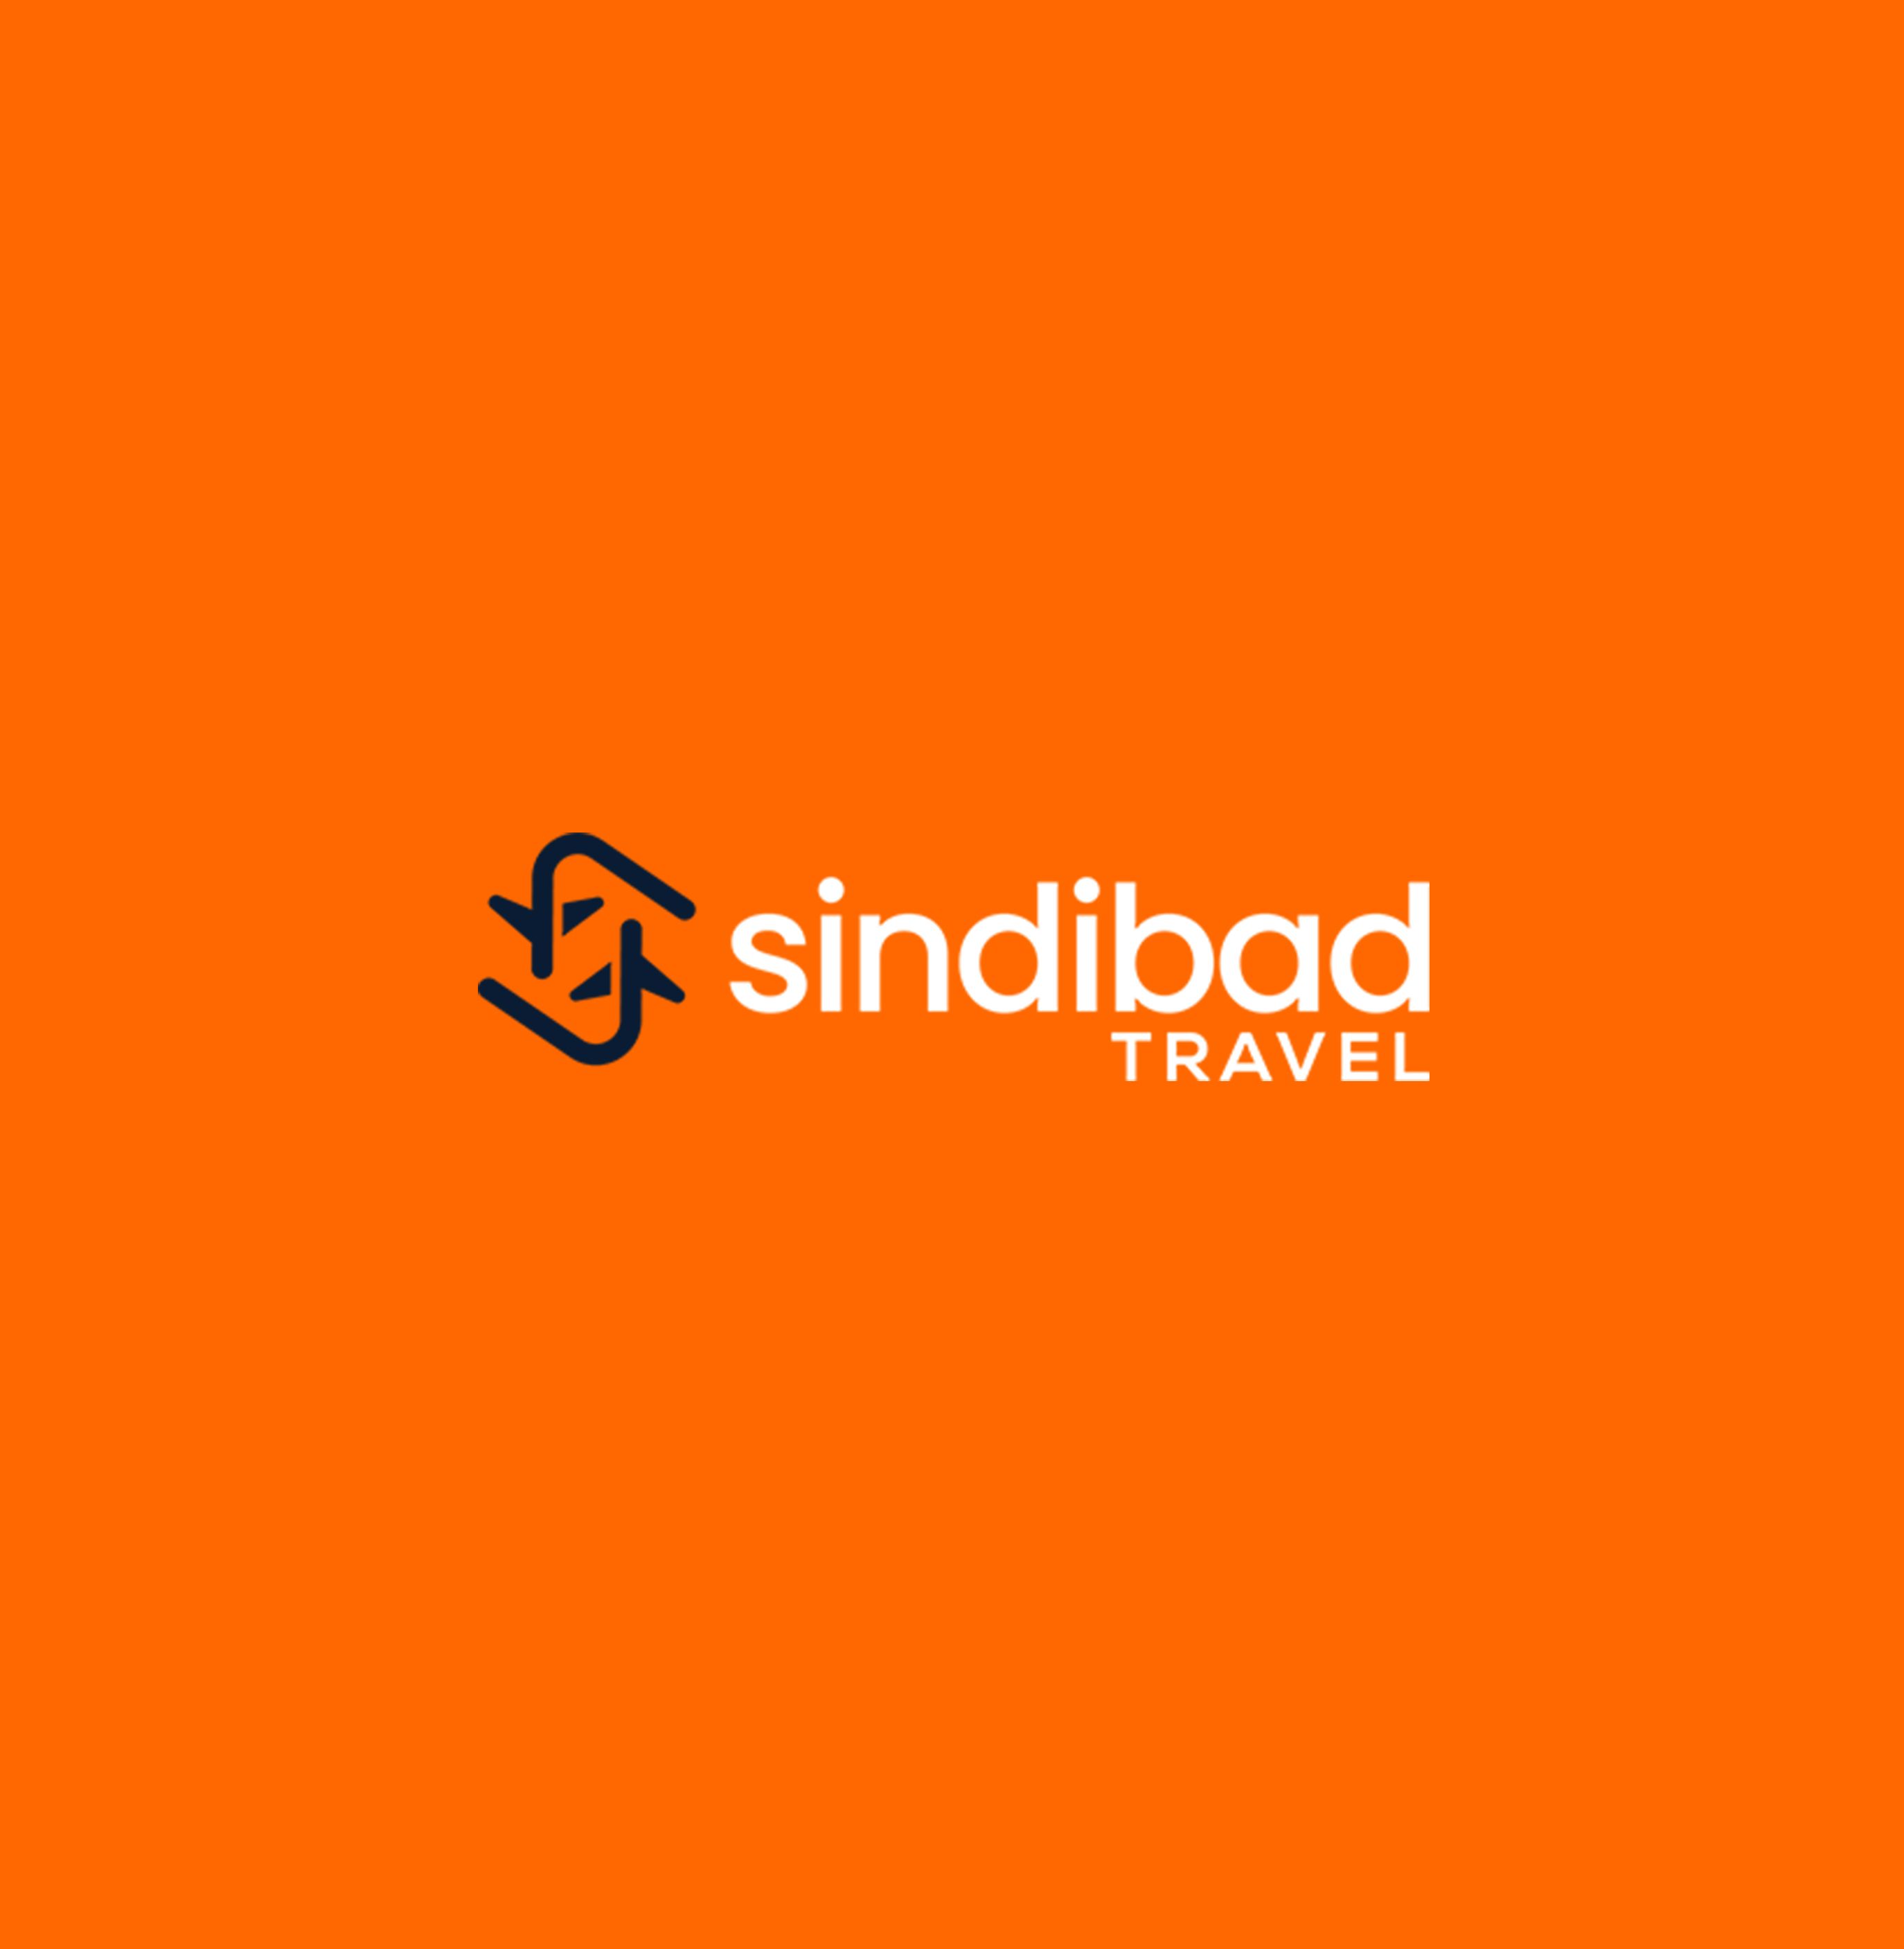 Sindibad Travel